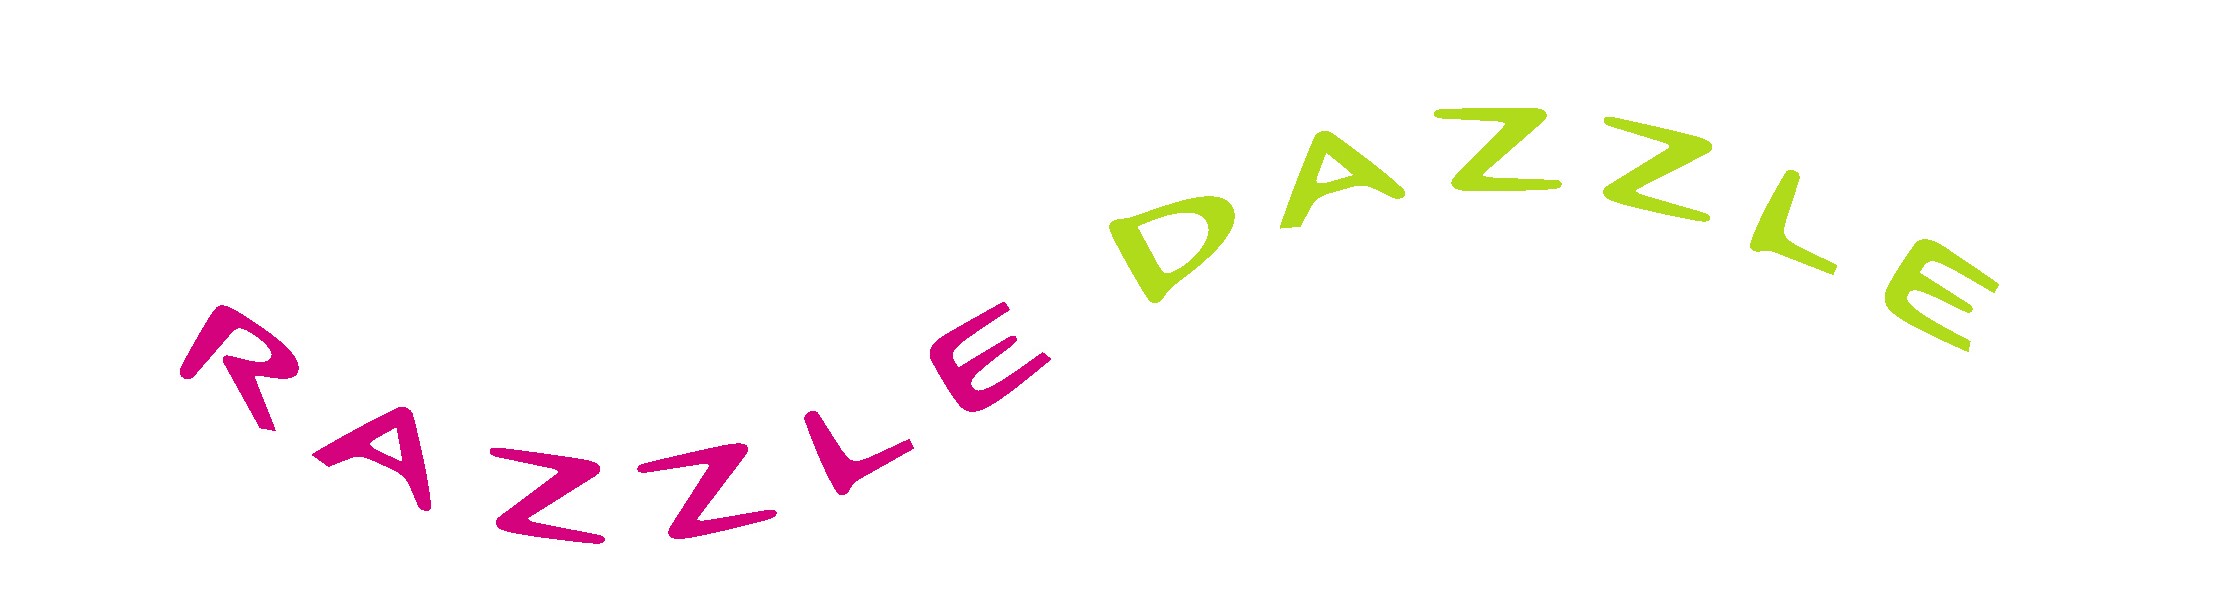 Image of Razzle Dazzle Logo